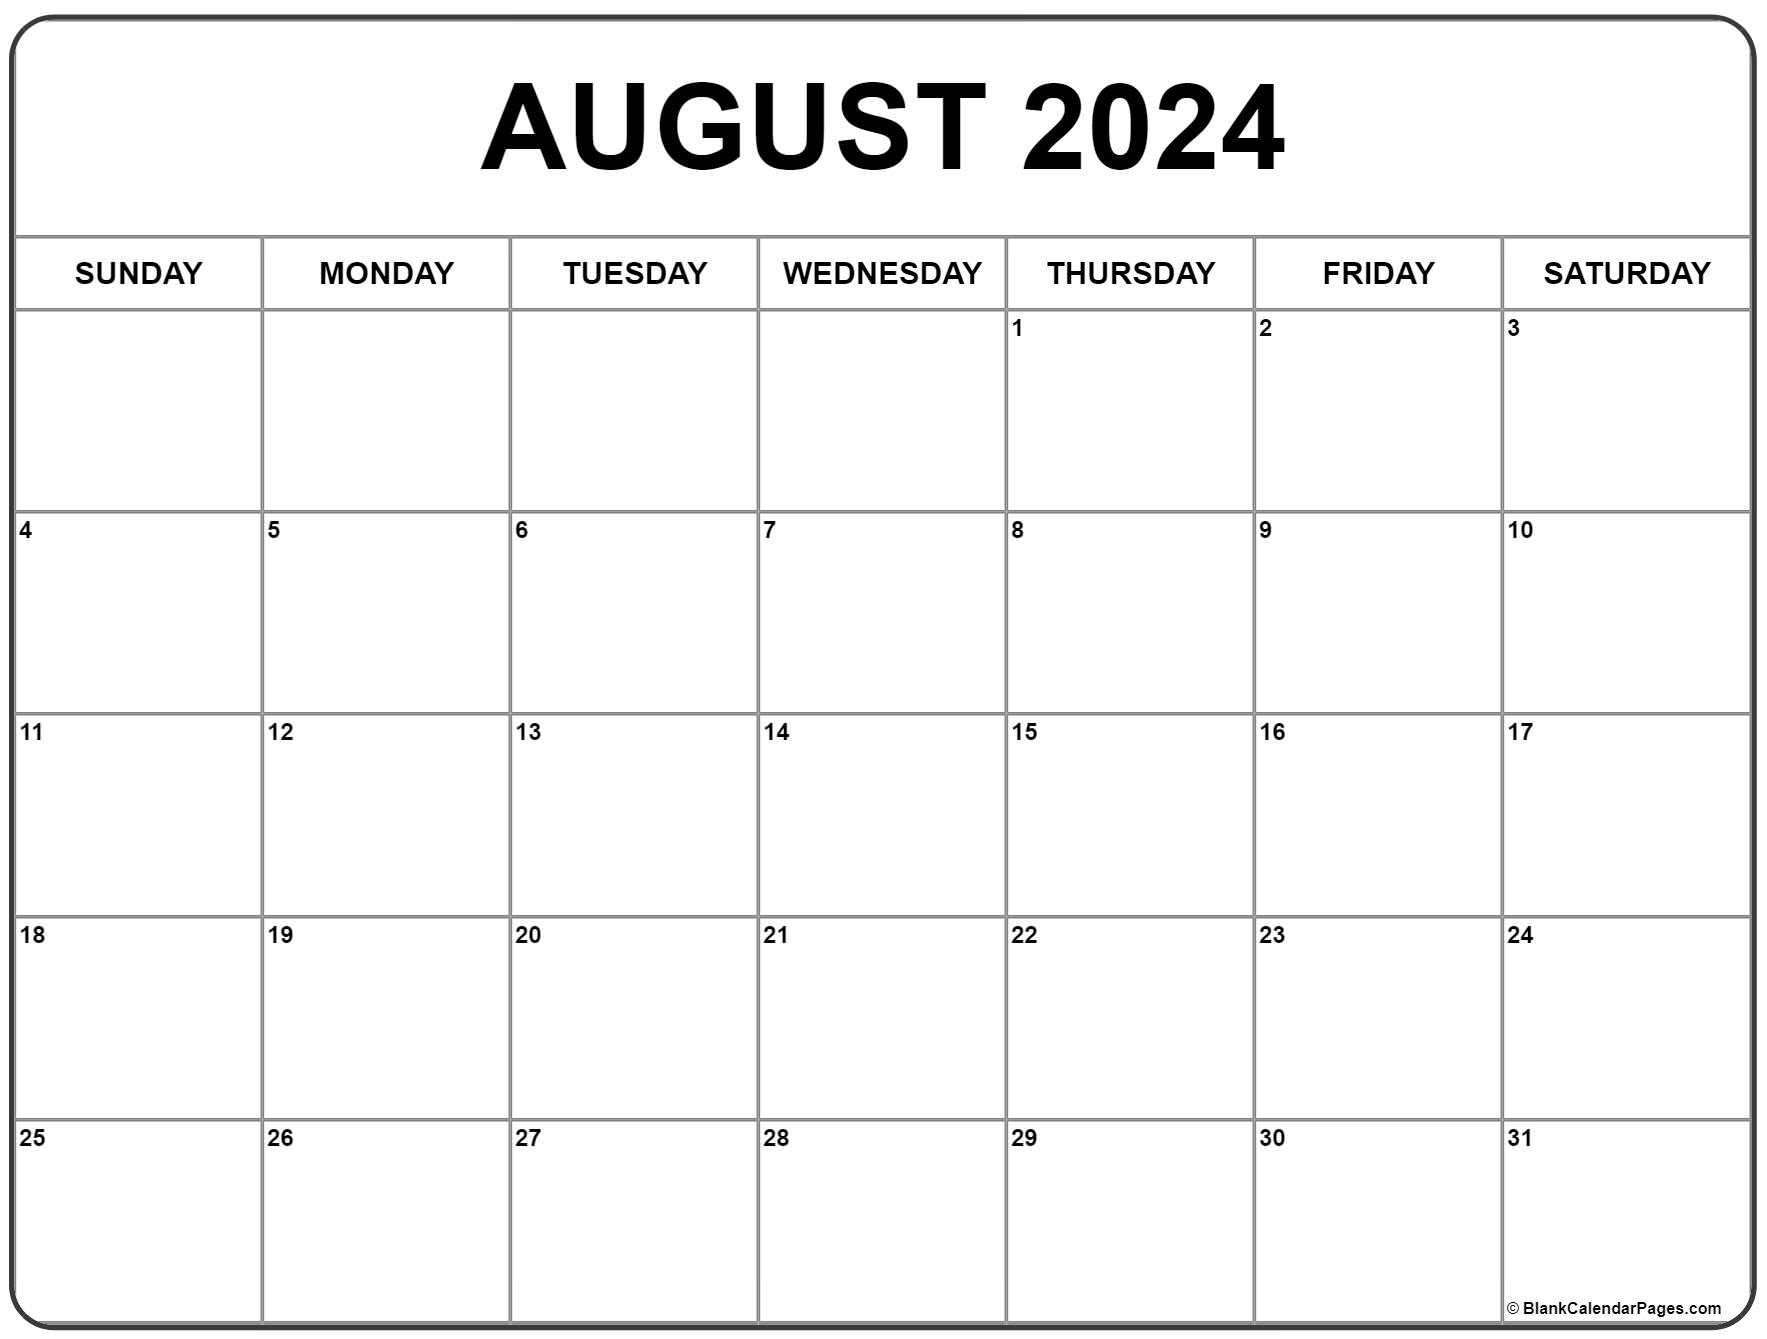 August 2024 Calendar | Free Printable Calendar for August 2024 Calendar Printable